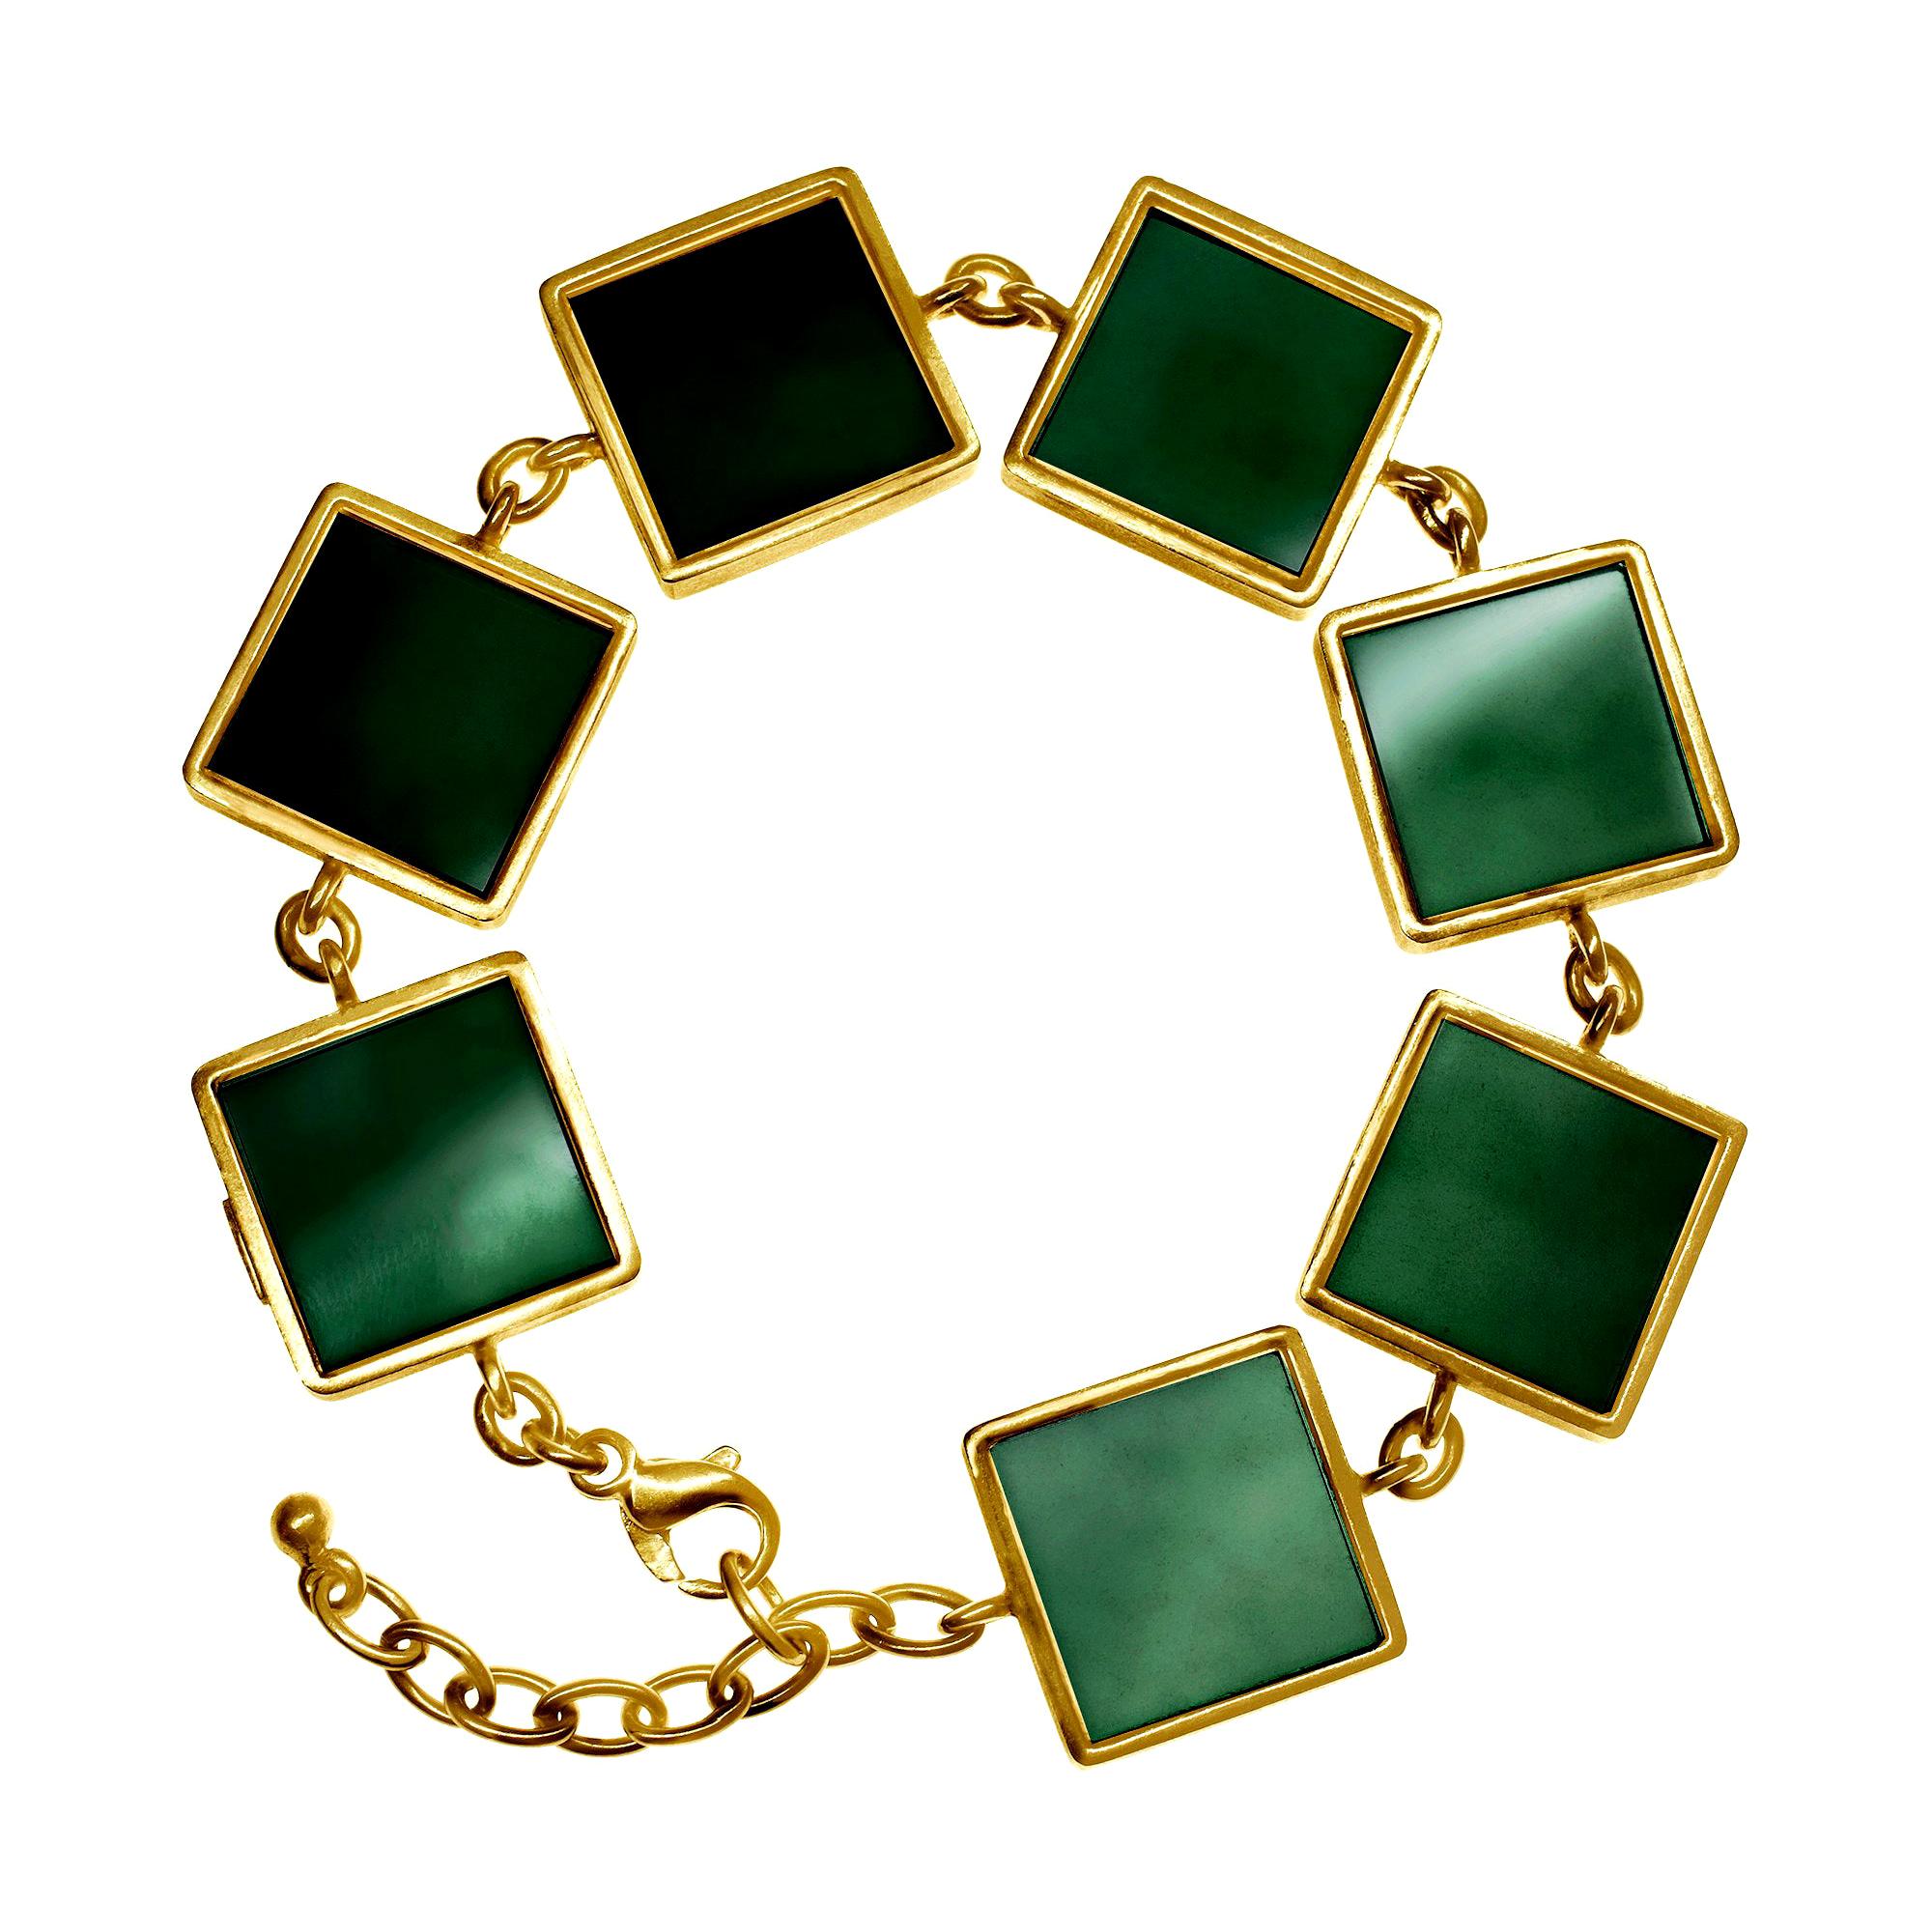 Eighteen Karat Gold Art Deco Style Bracelet with Dark Green Quartz